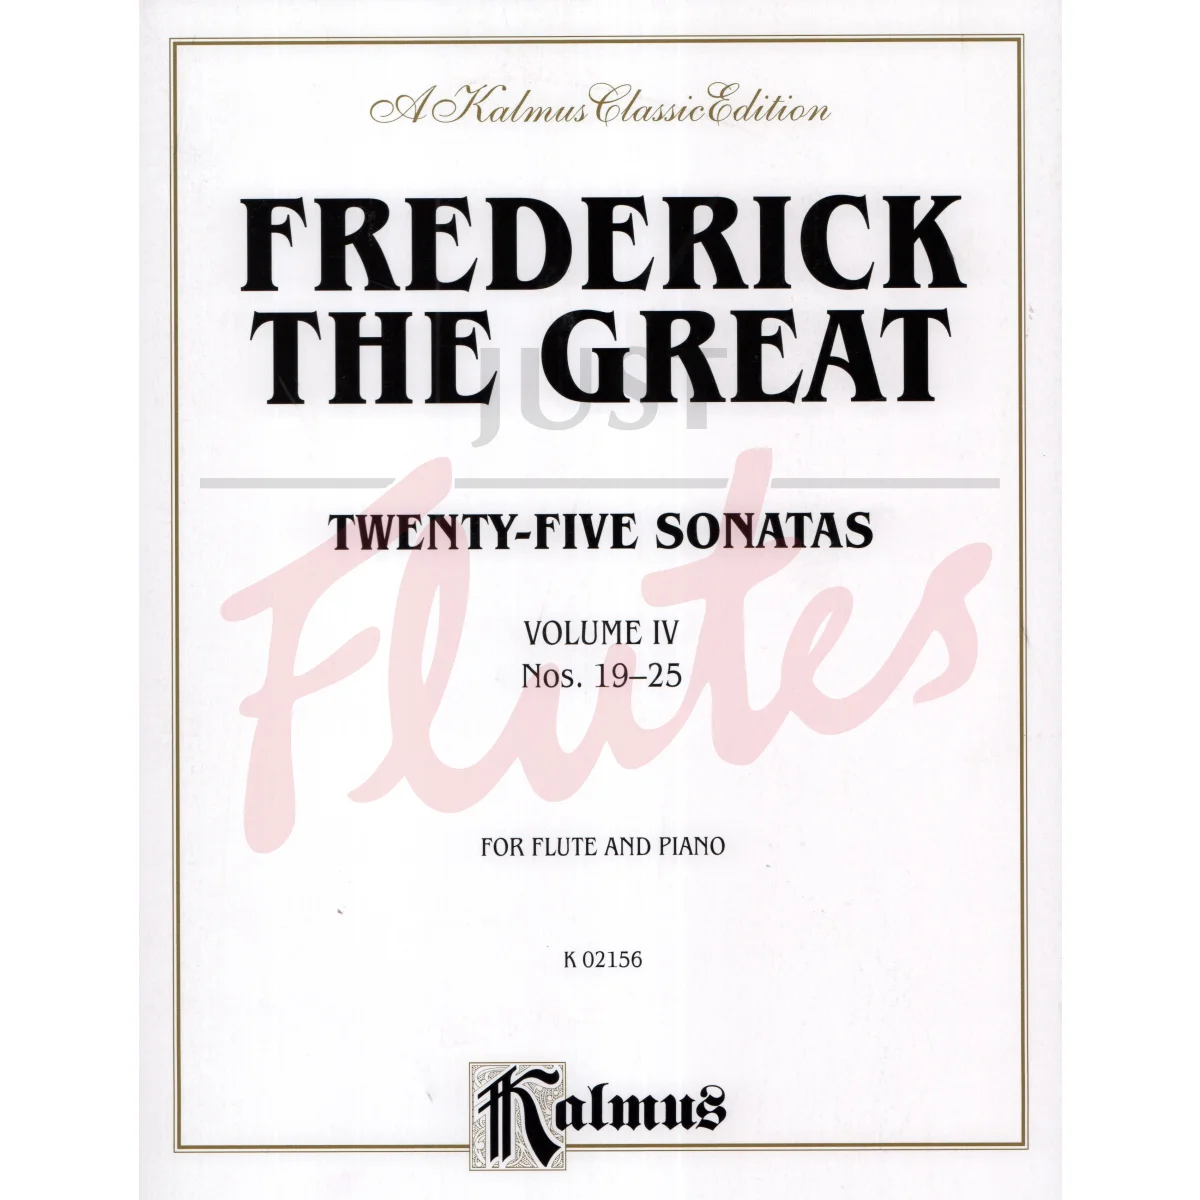 25 Sonatas for Flute and Piano, Volume 4 Nos. 19-25